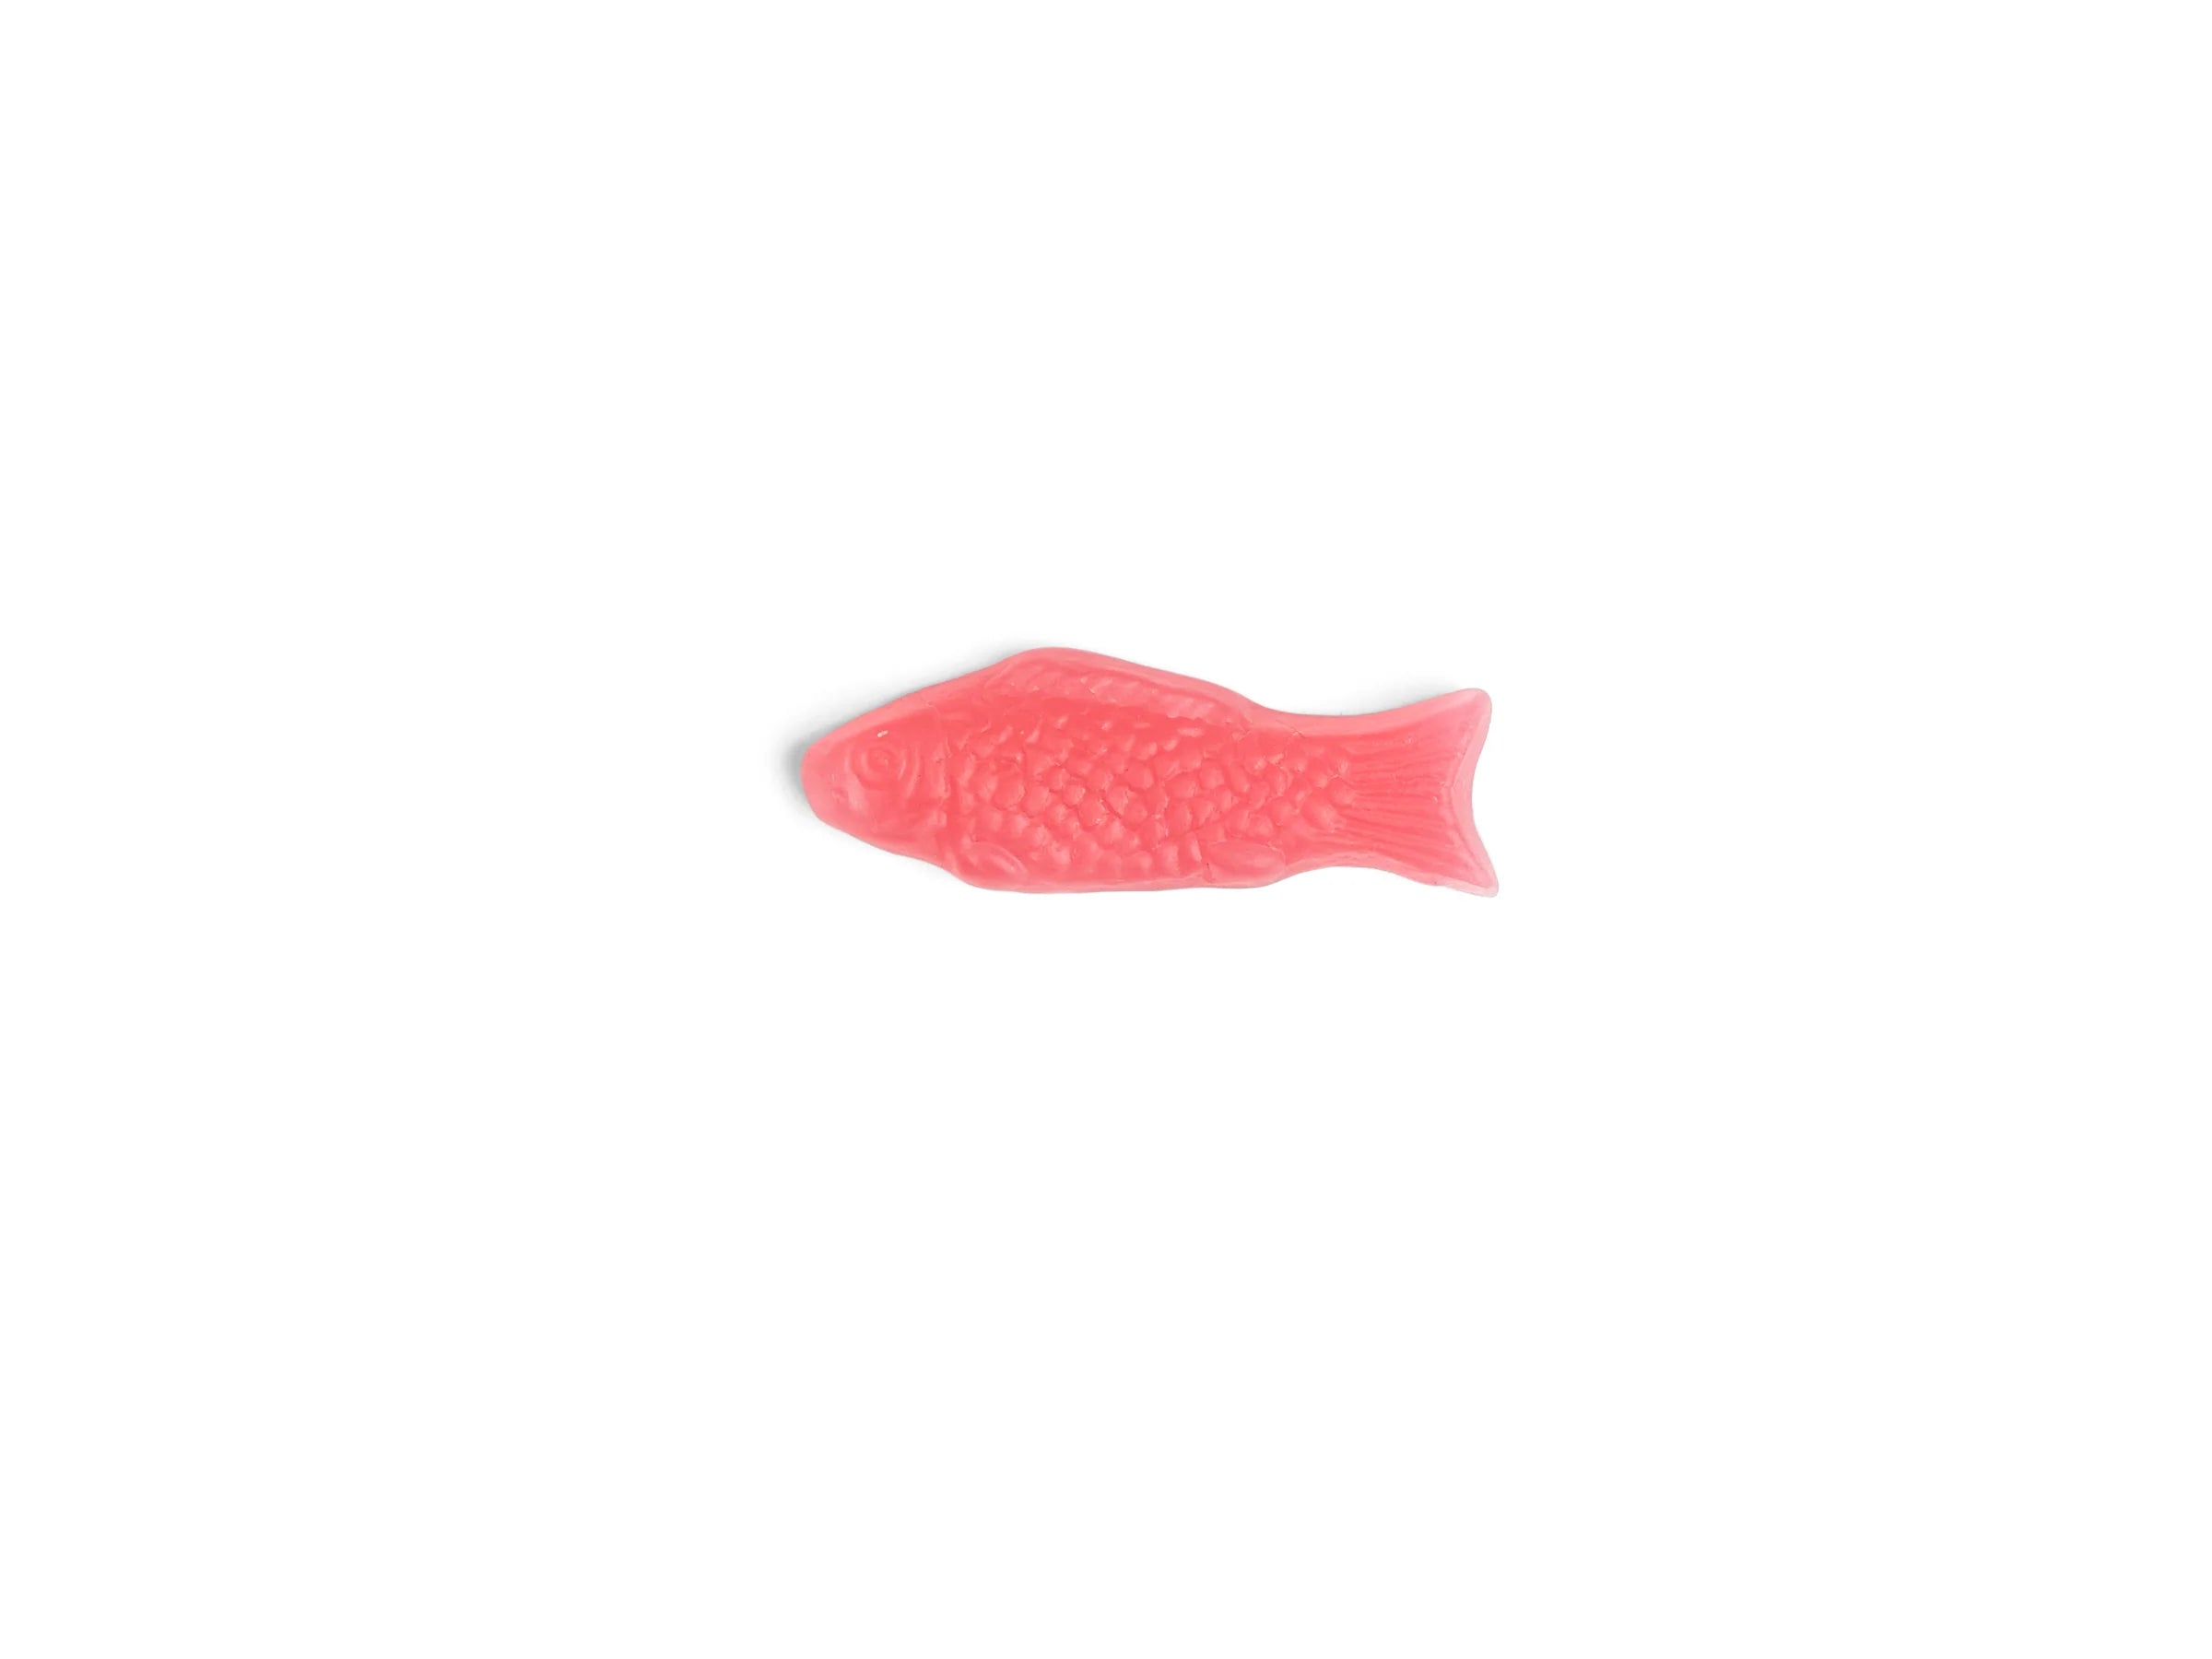 Kolsvart Raspberry Candy Fish - Sweden - Torrone Candy